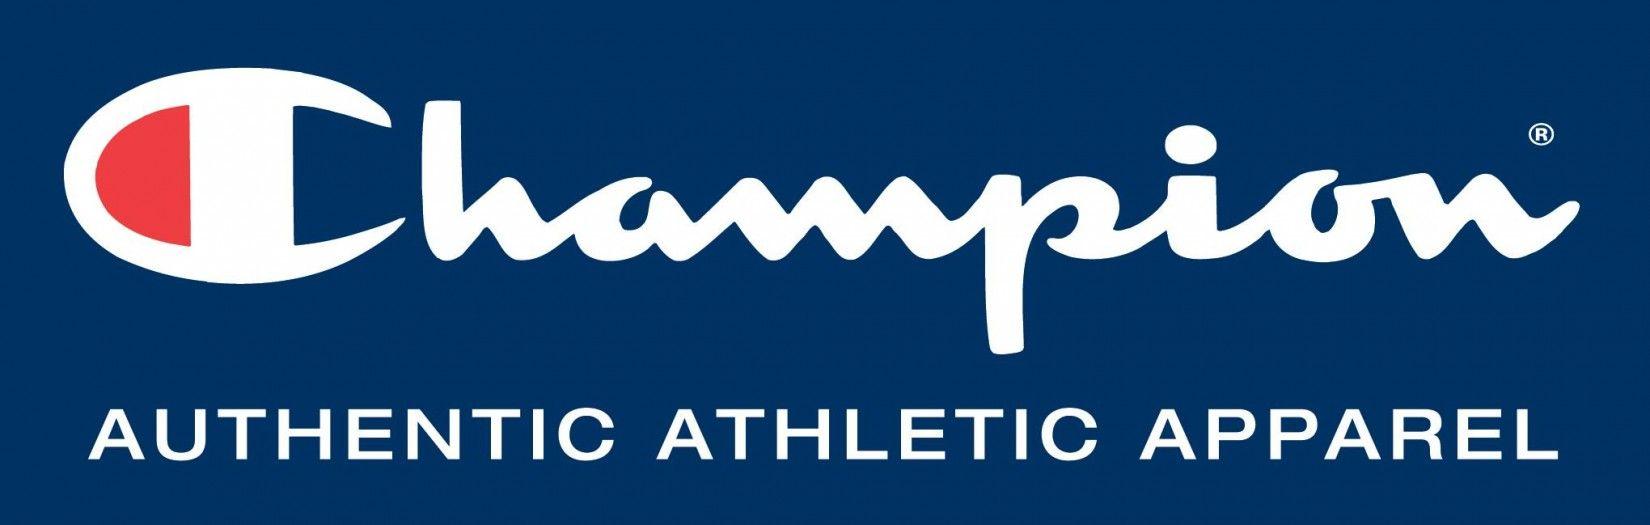 Champion Athletic Logo - Champion USA font - forum | dafont.com